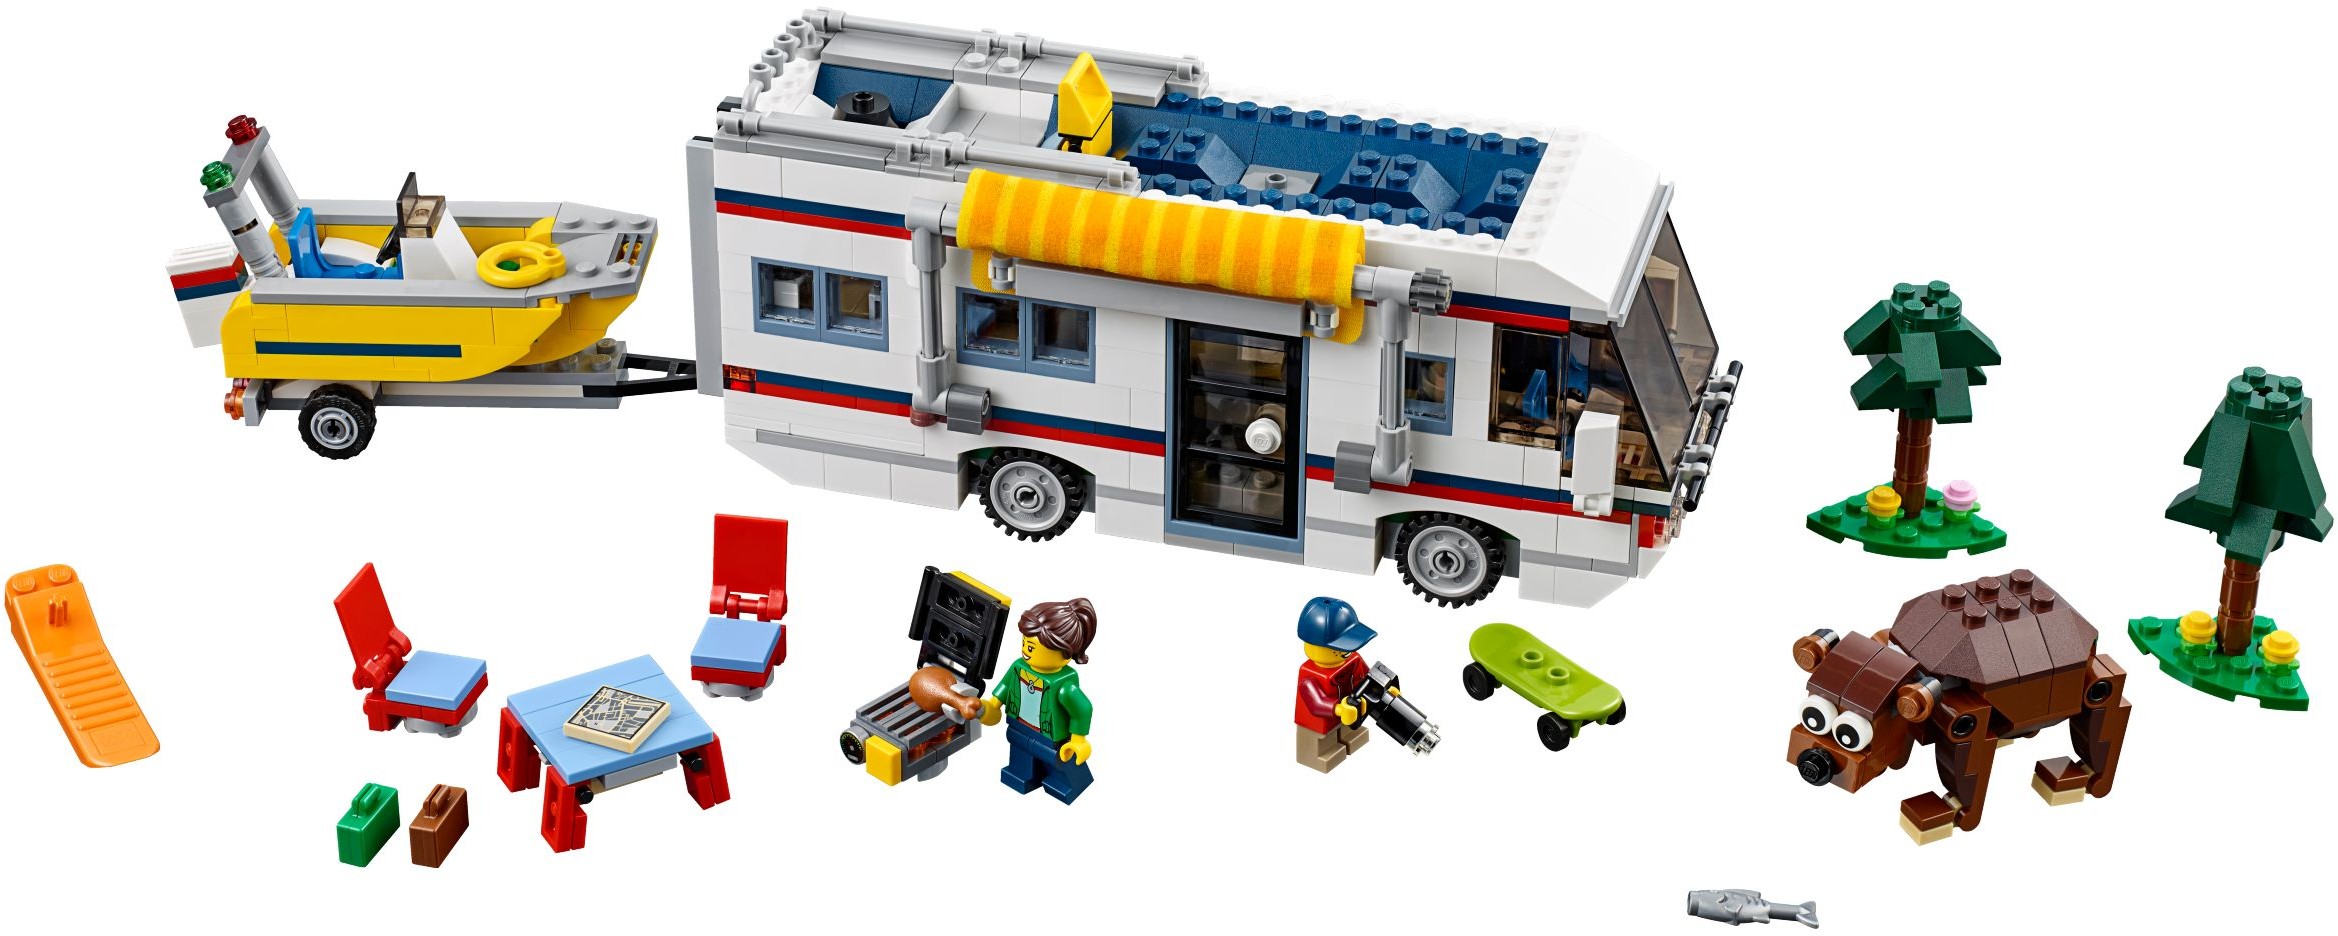 In set 31052-1 Brickset: LEGO guide and database